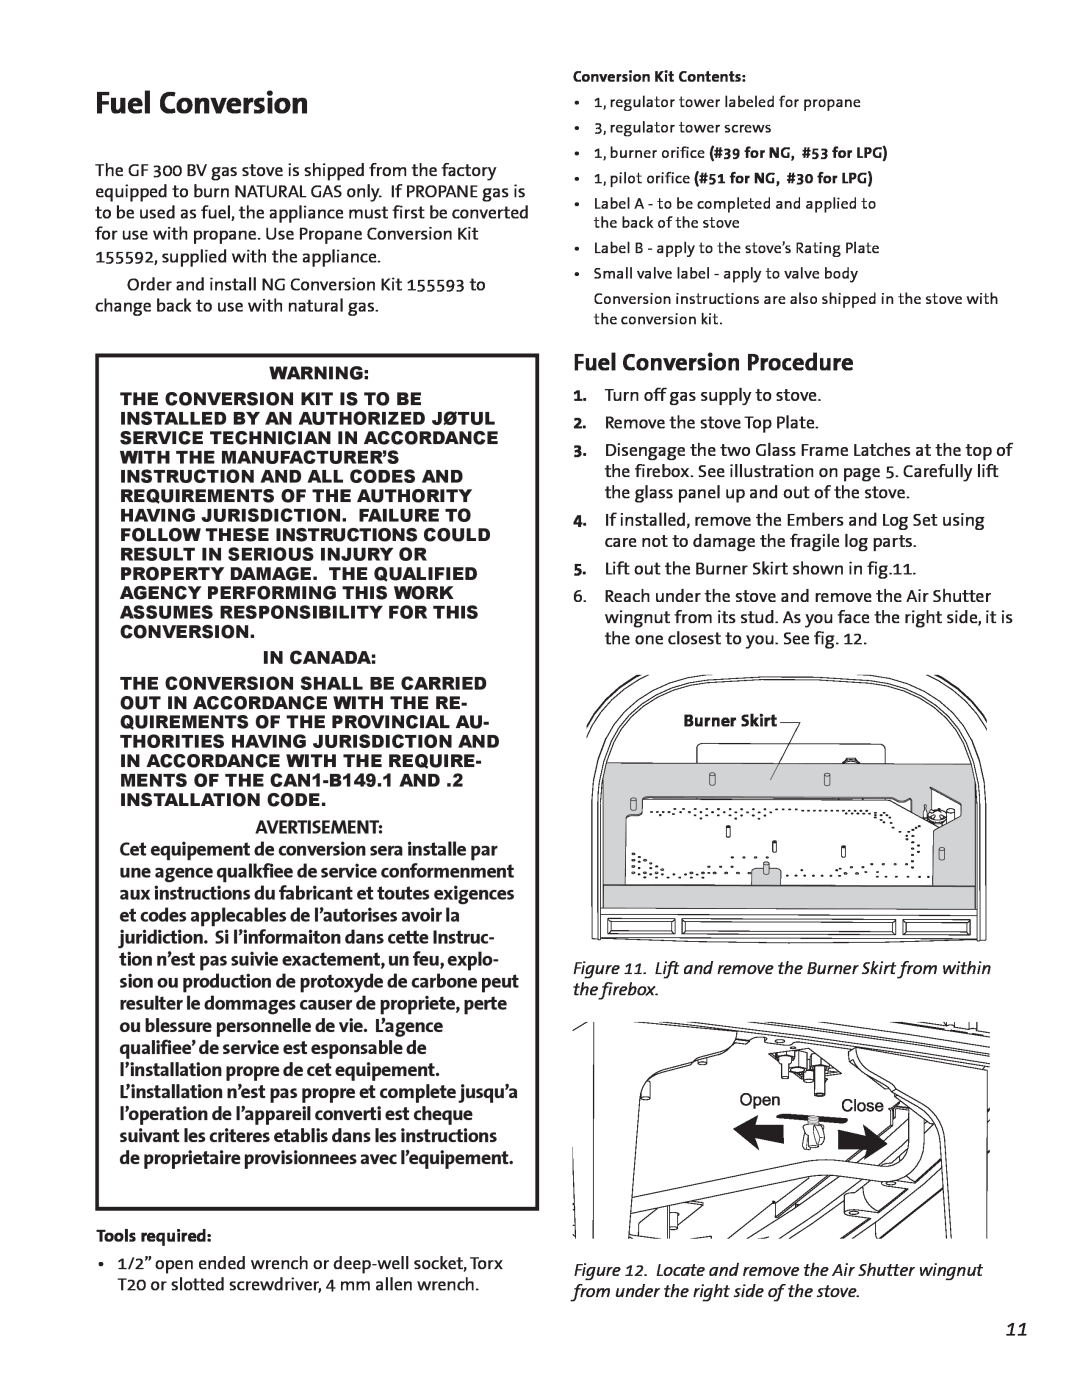 Jotul GF300 BV manual Fuel Conversion Procedure, Avertisement 